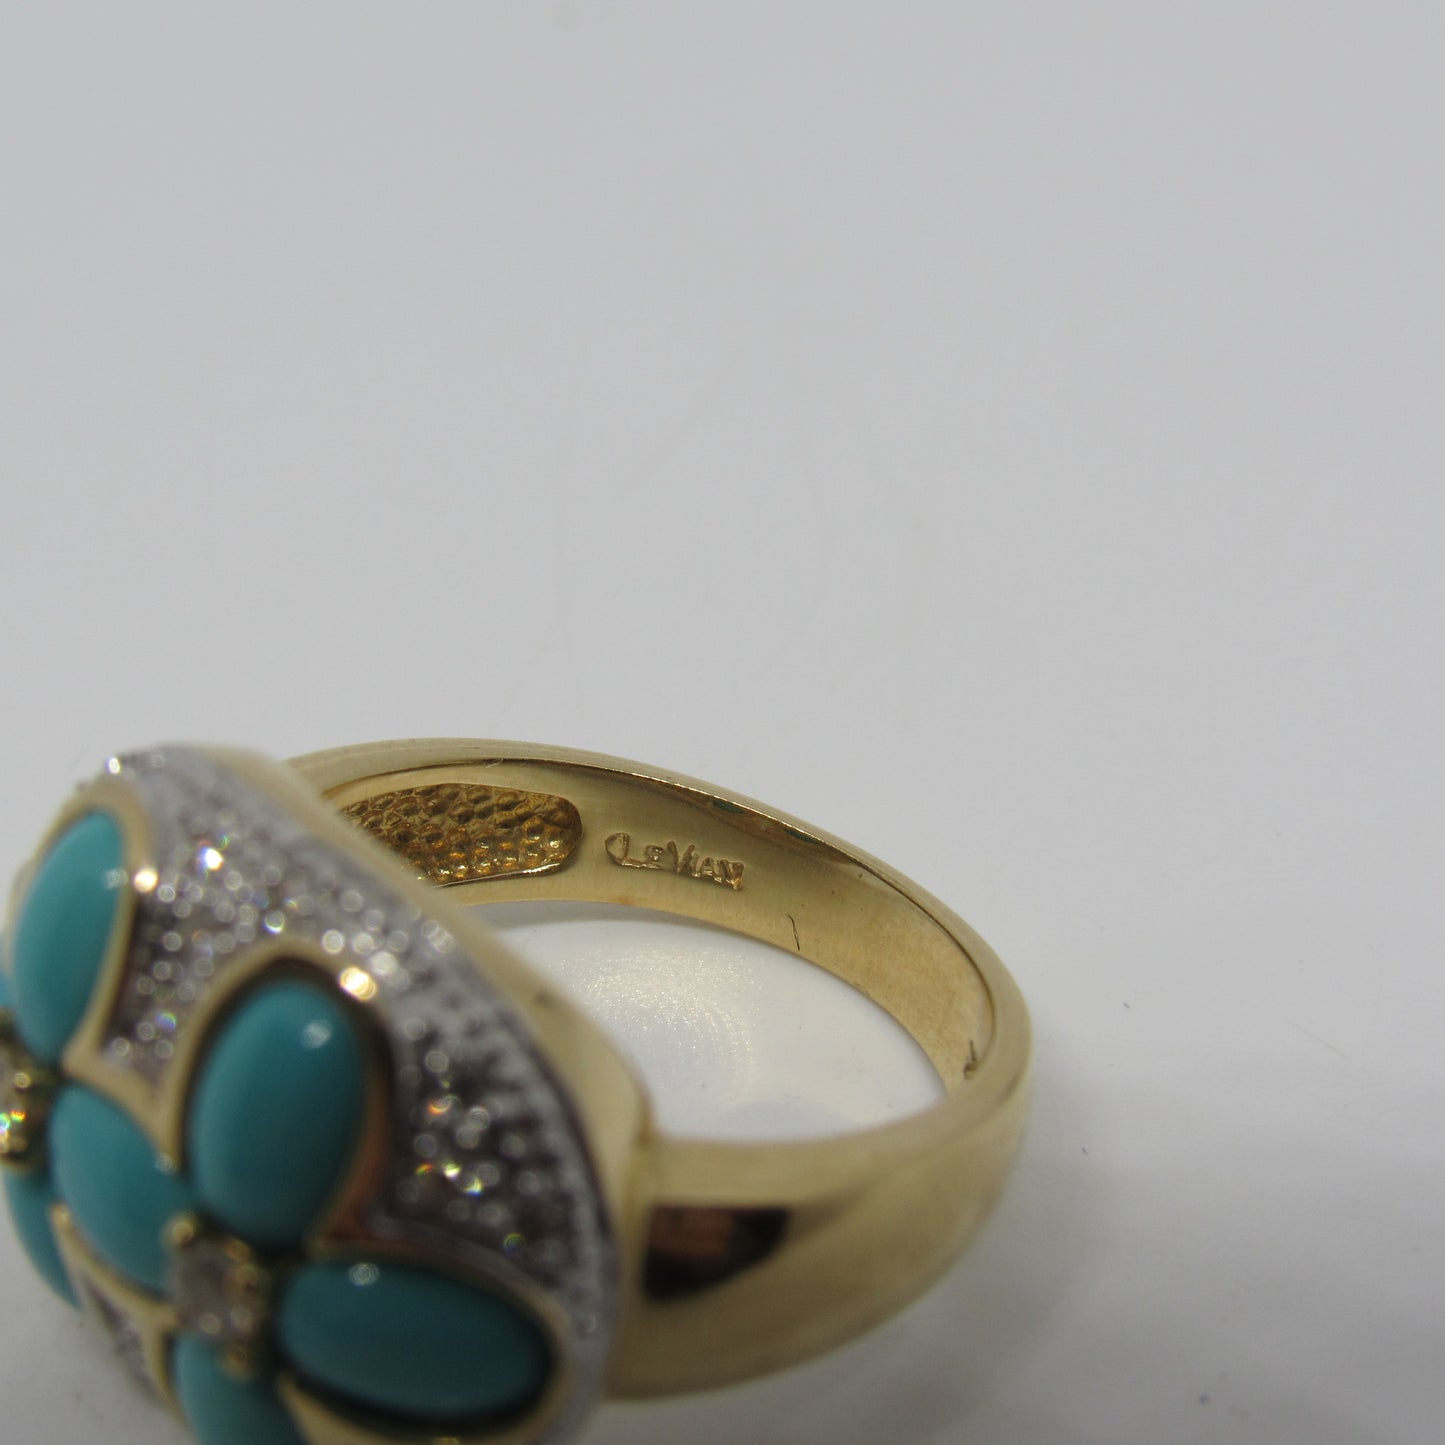 LeVian 14k Yellow Gold Turquoise & Diamond Statement Ring - Sz 6.75